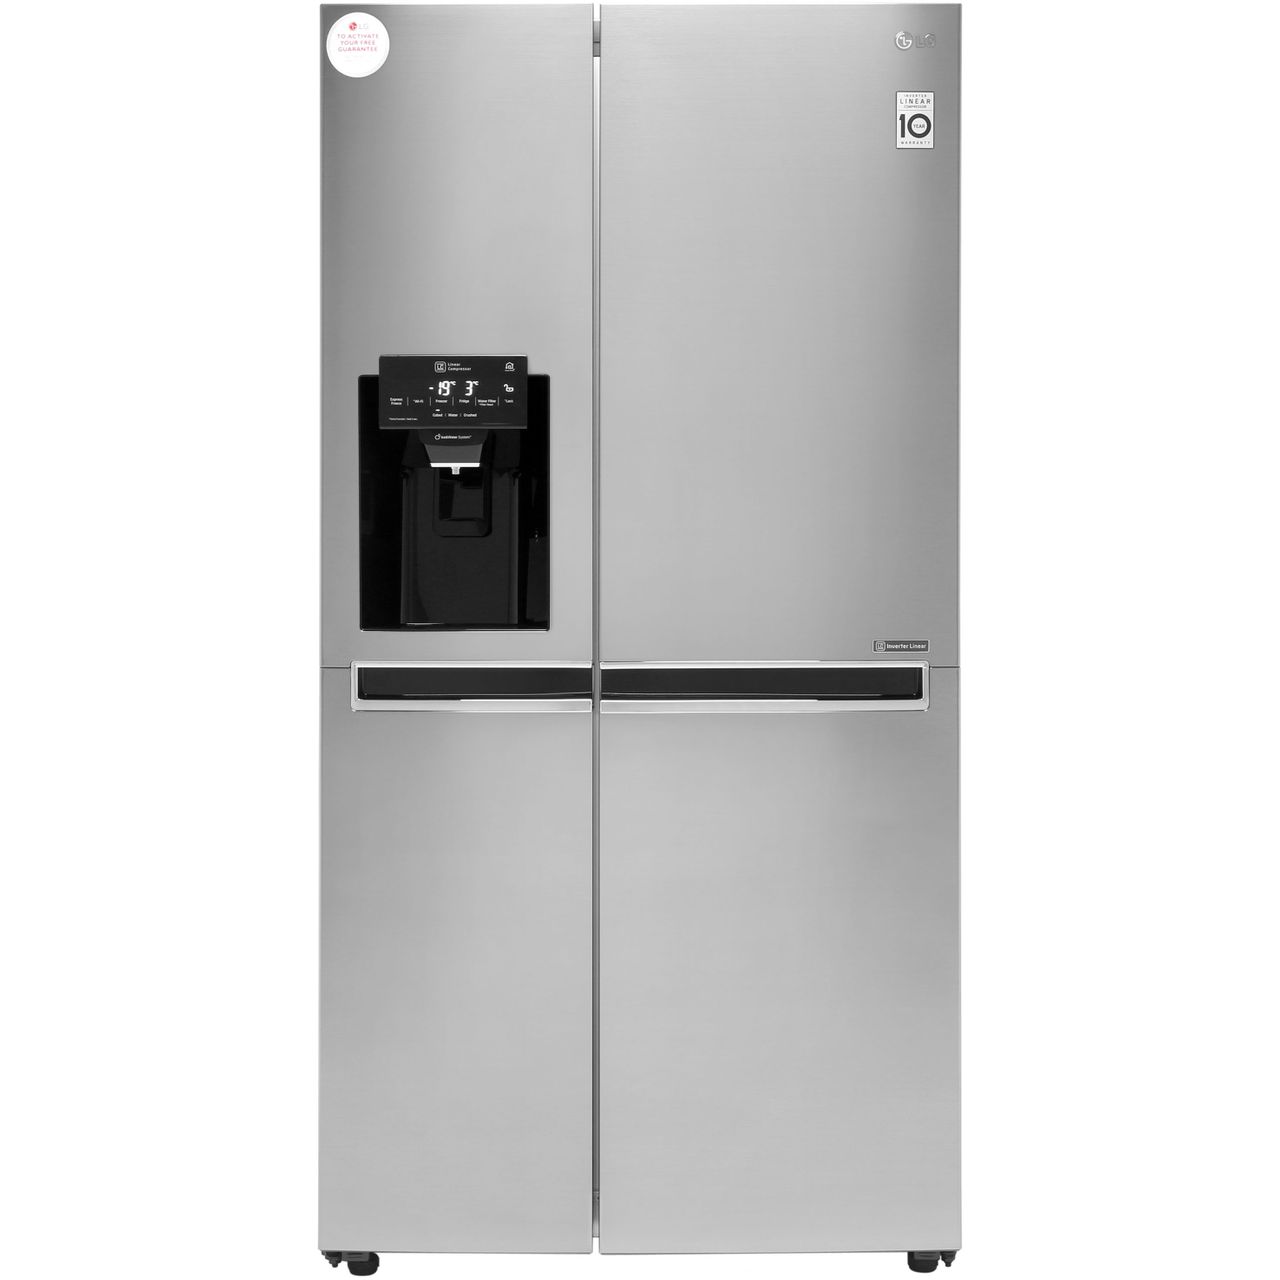 13++ Amazon fridge freezer spare parts information